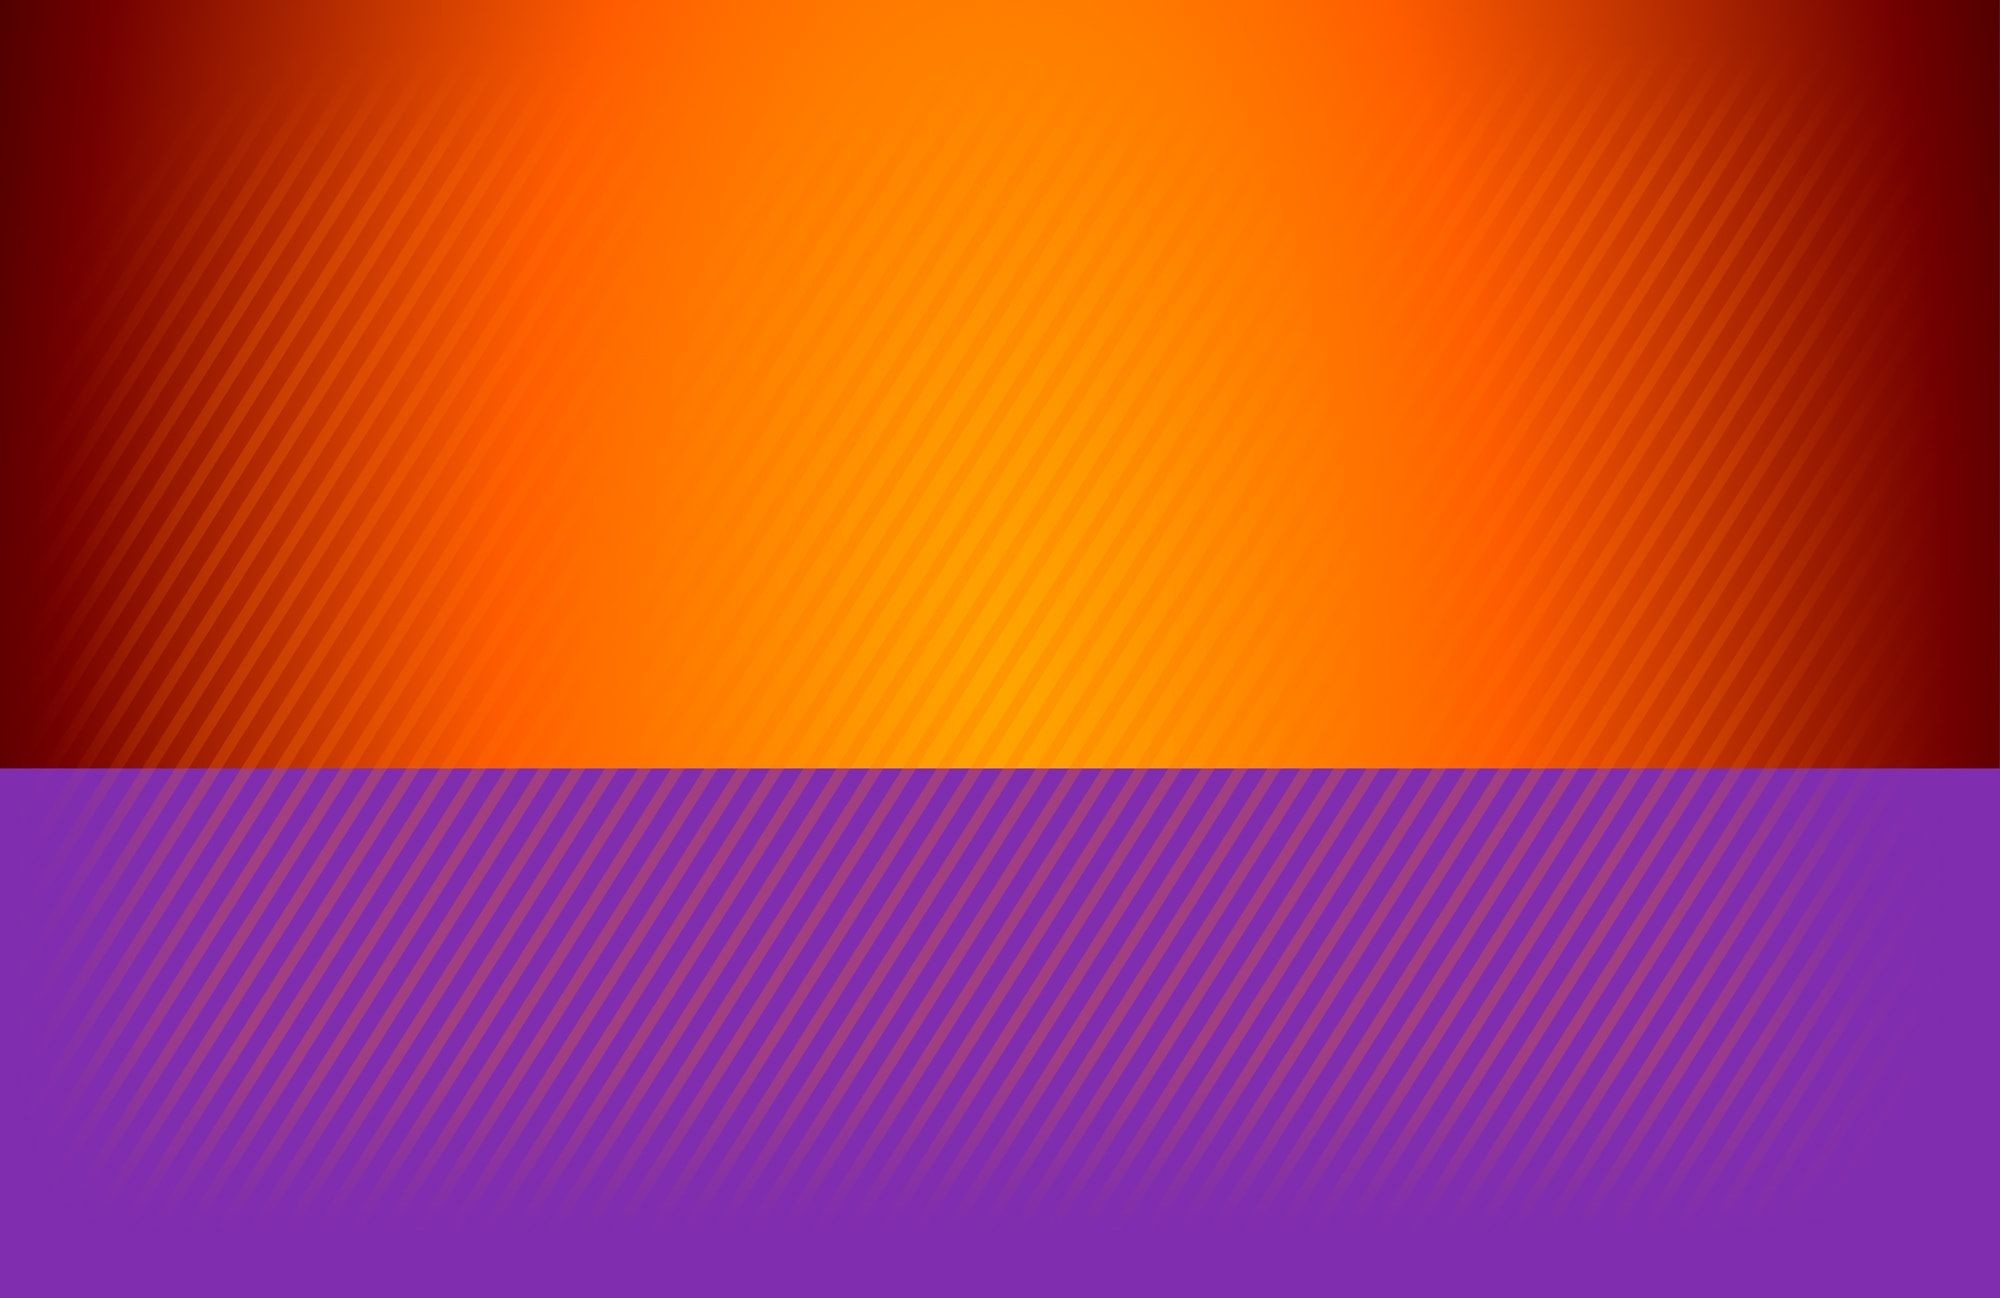 Background Striped Orange And Purple 2000x1298